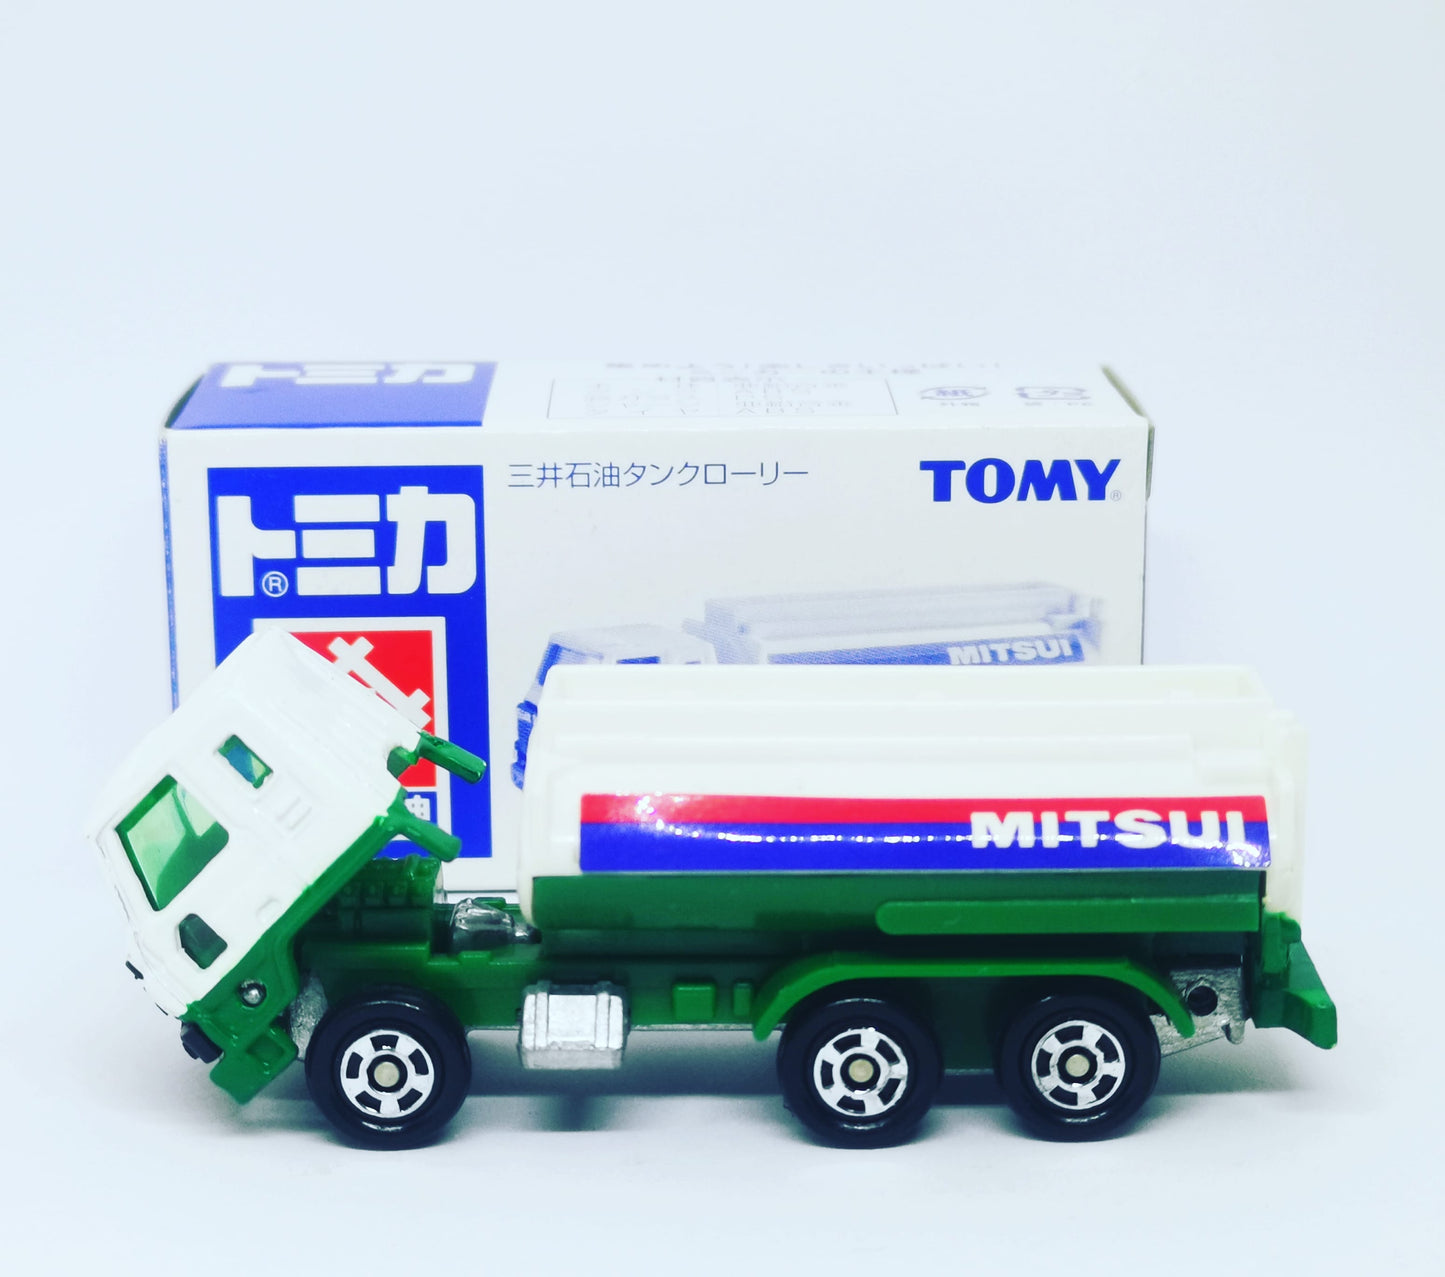 Tomica Mitsui Petrol Exclusive Item
Nissan Diesel Trucks 
Mitsui Petrol Tank Lorry